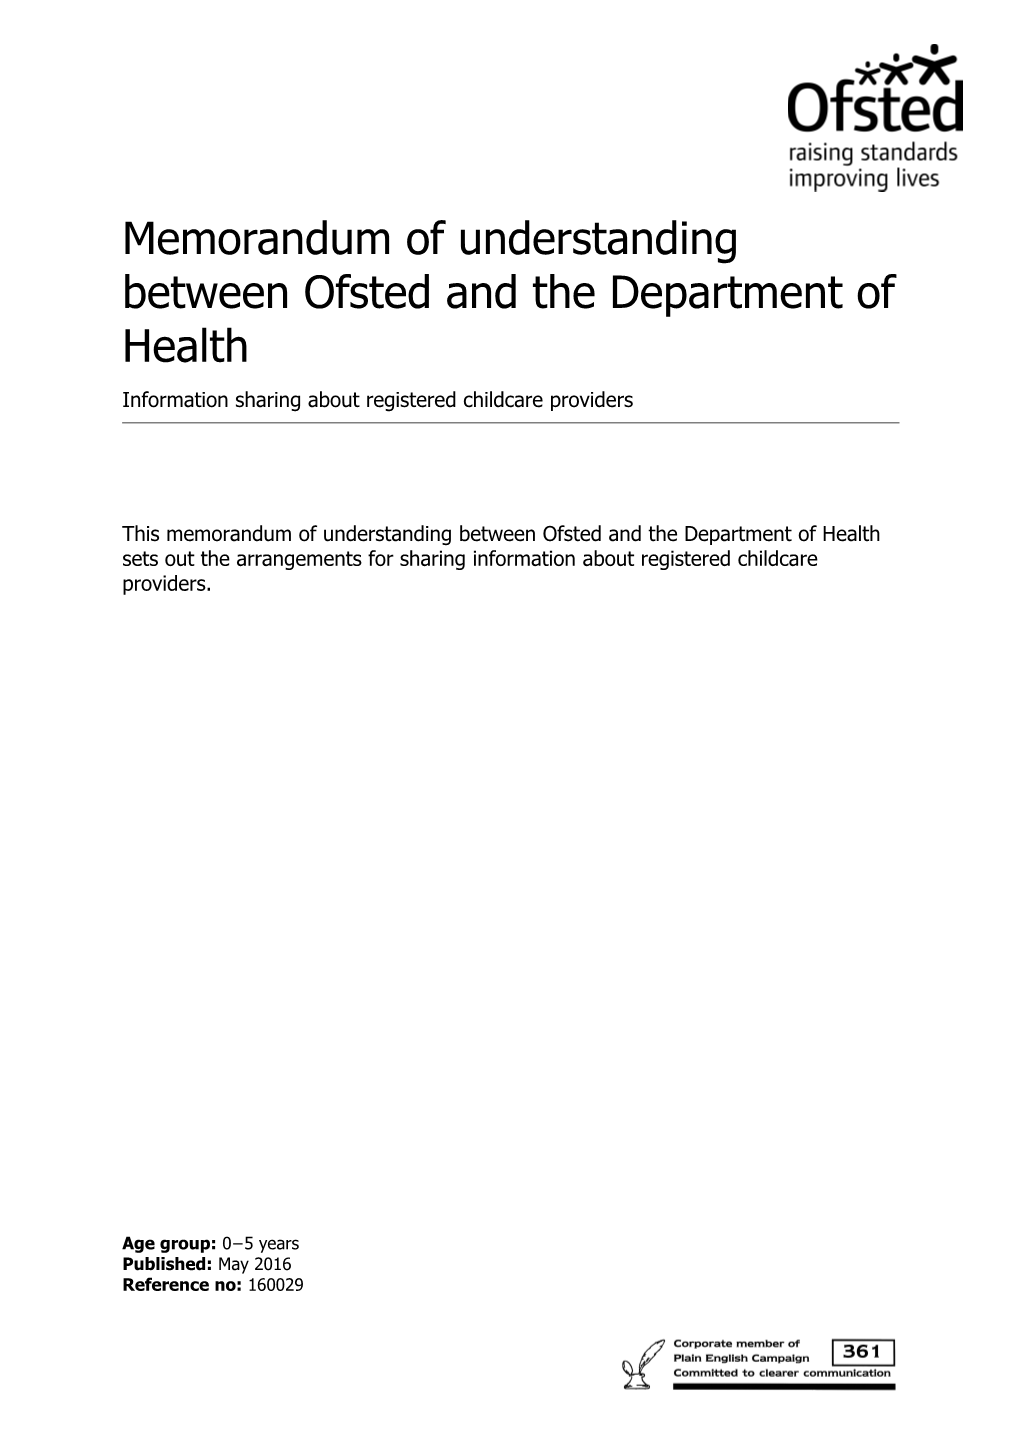 Memorandum of Understanding Between Ofsted and the Department of Health